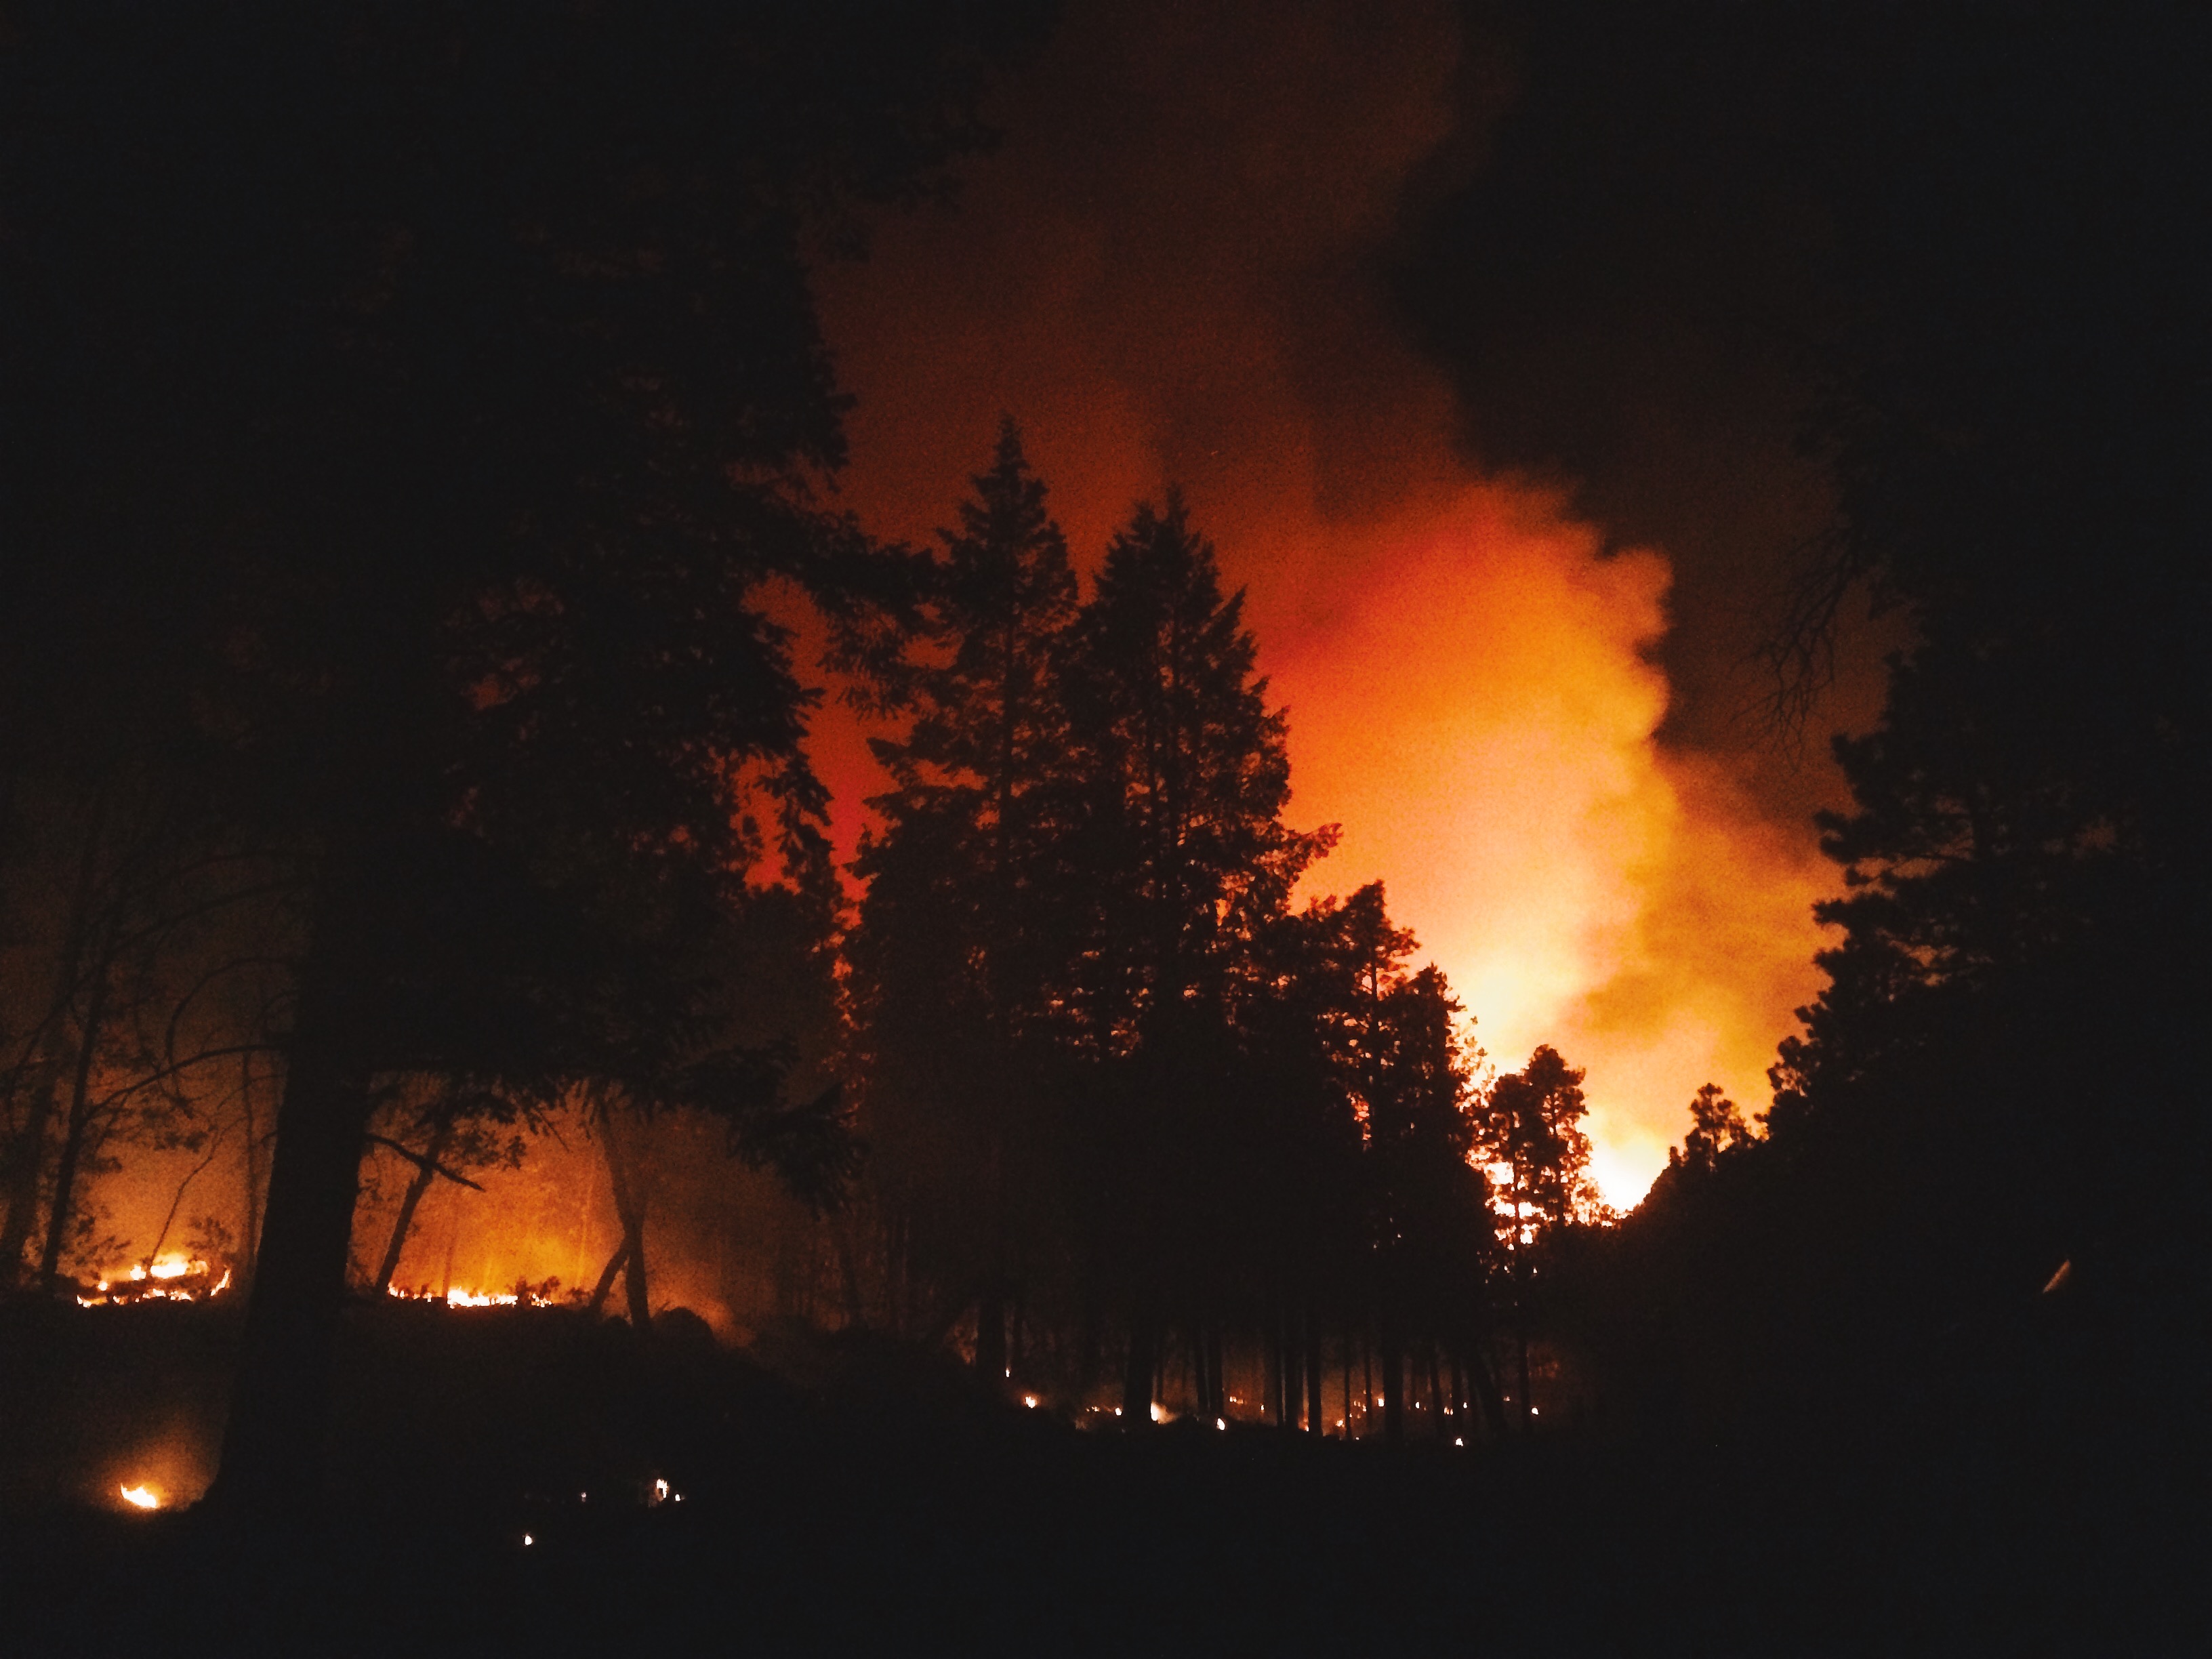 Night shot of wildland fire taken by ExpertVoice Expert Gregg Boydston